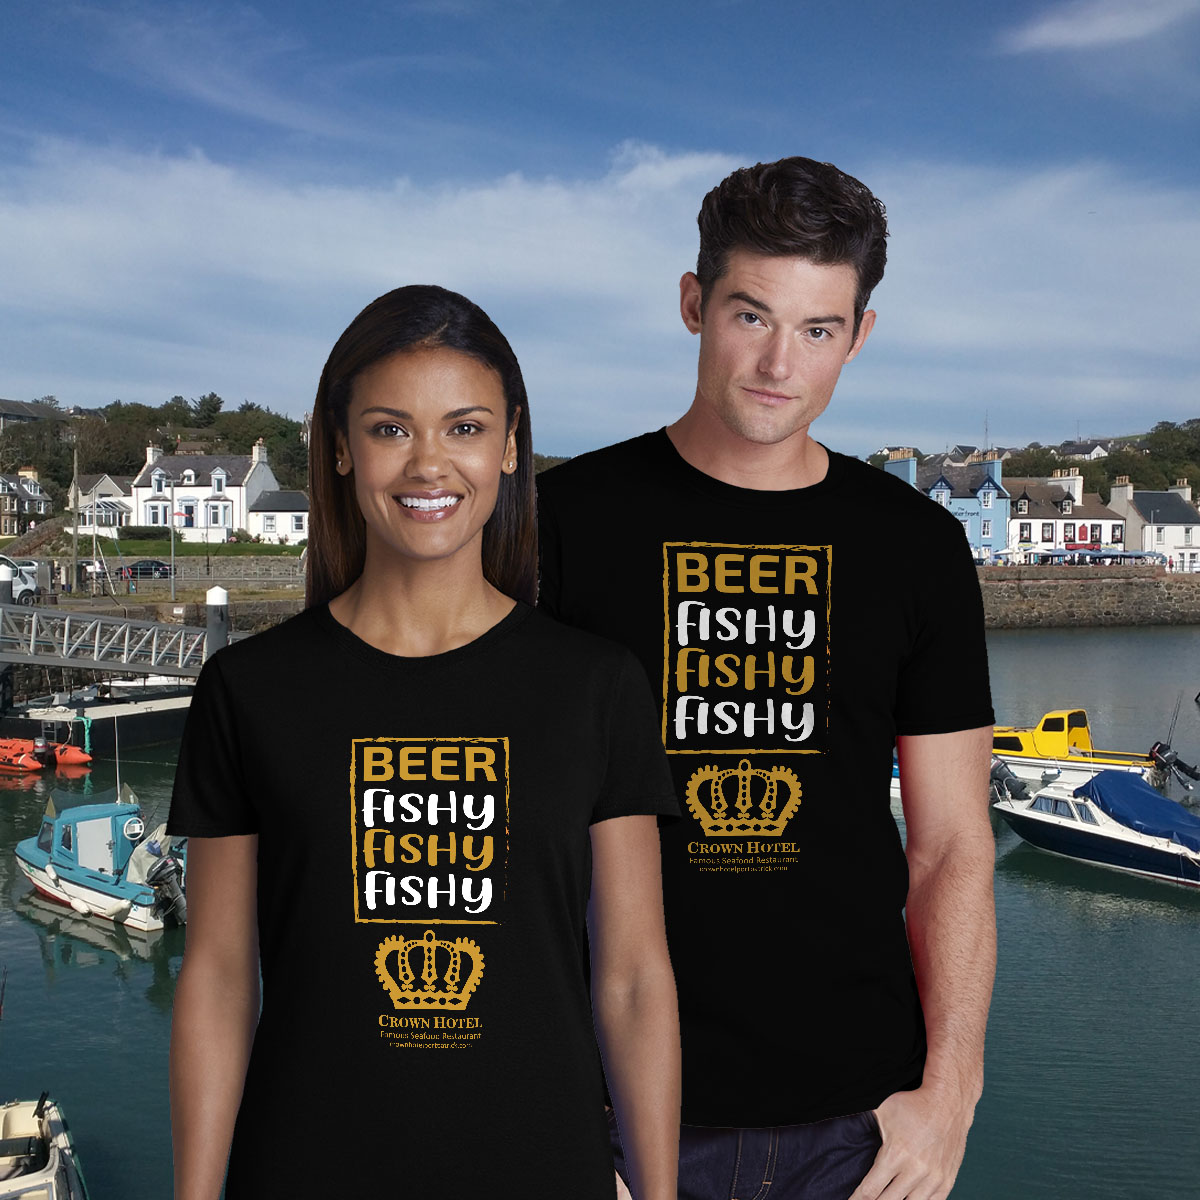 BeerFishyFishyFishy-Crown-Hotel-Portpatrick-Gildan6400-Unisex-Beer-T-Shirt-with-bgnd-couple